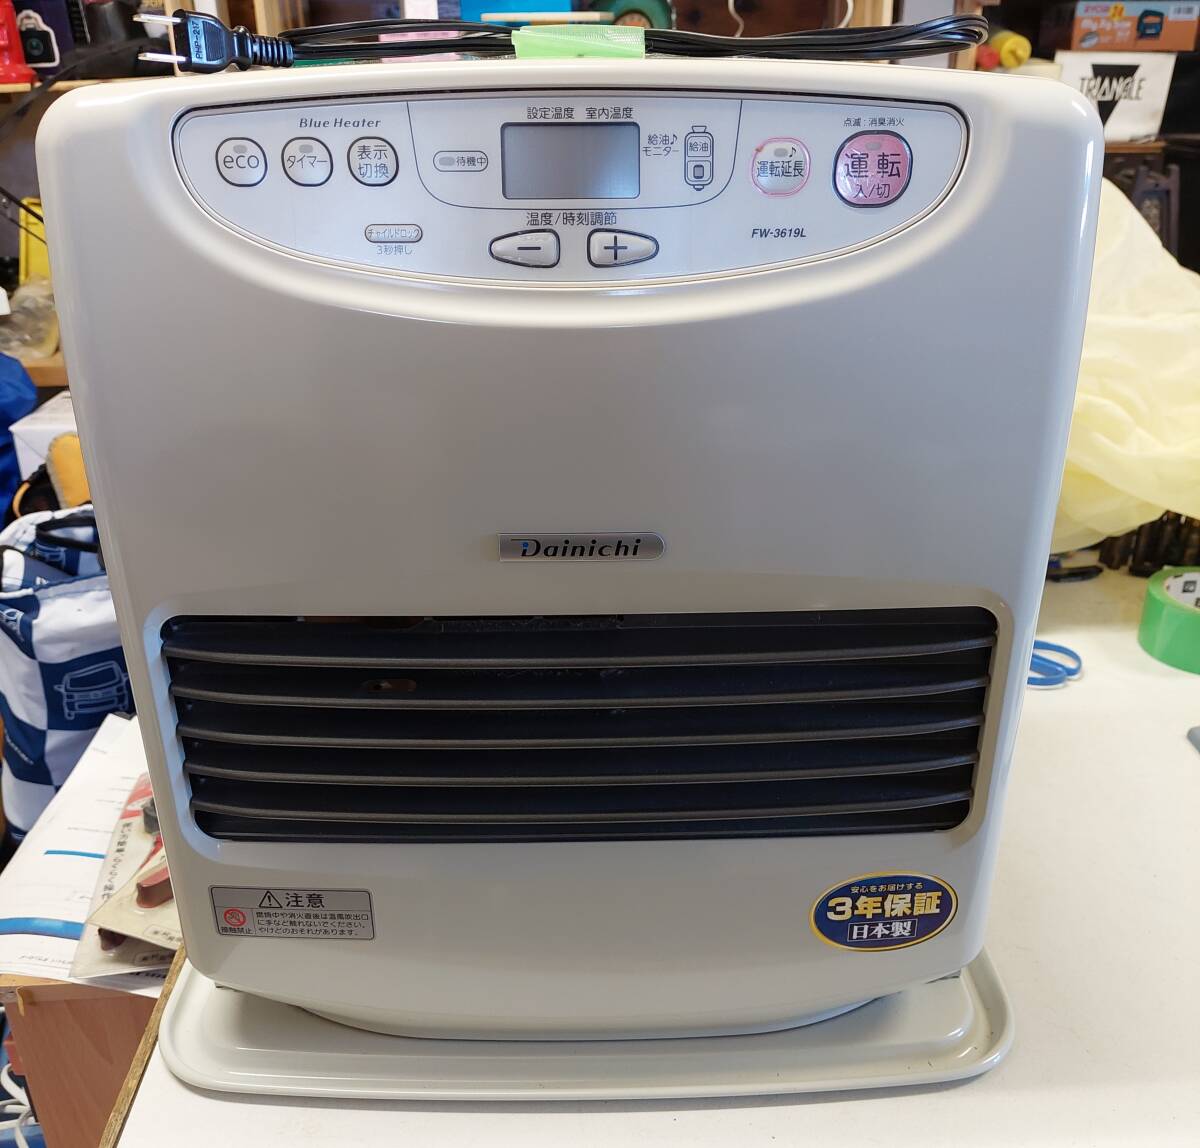 * electrical appliances * consumer electronics product * Dainichi * kerosene fan heater * blue heater *FW-3619L*2019 year * secondhand goods *